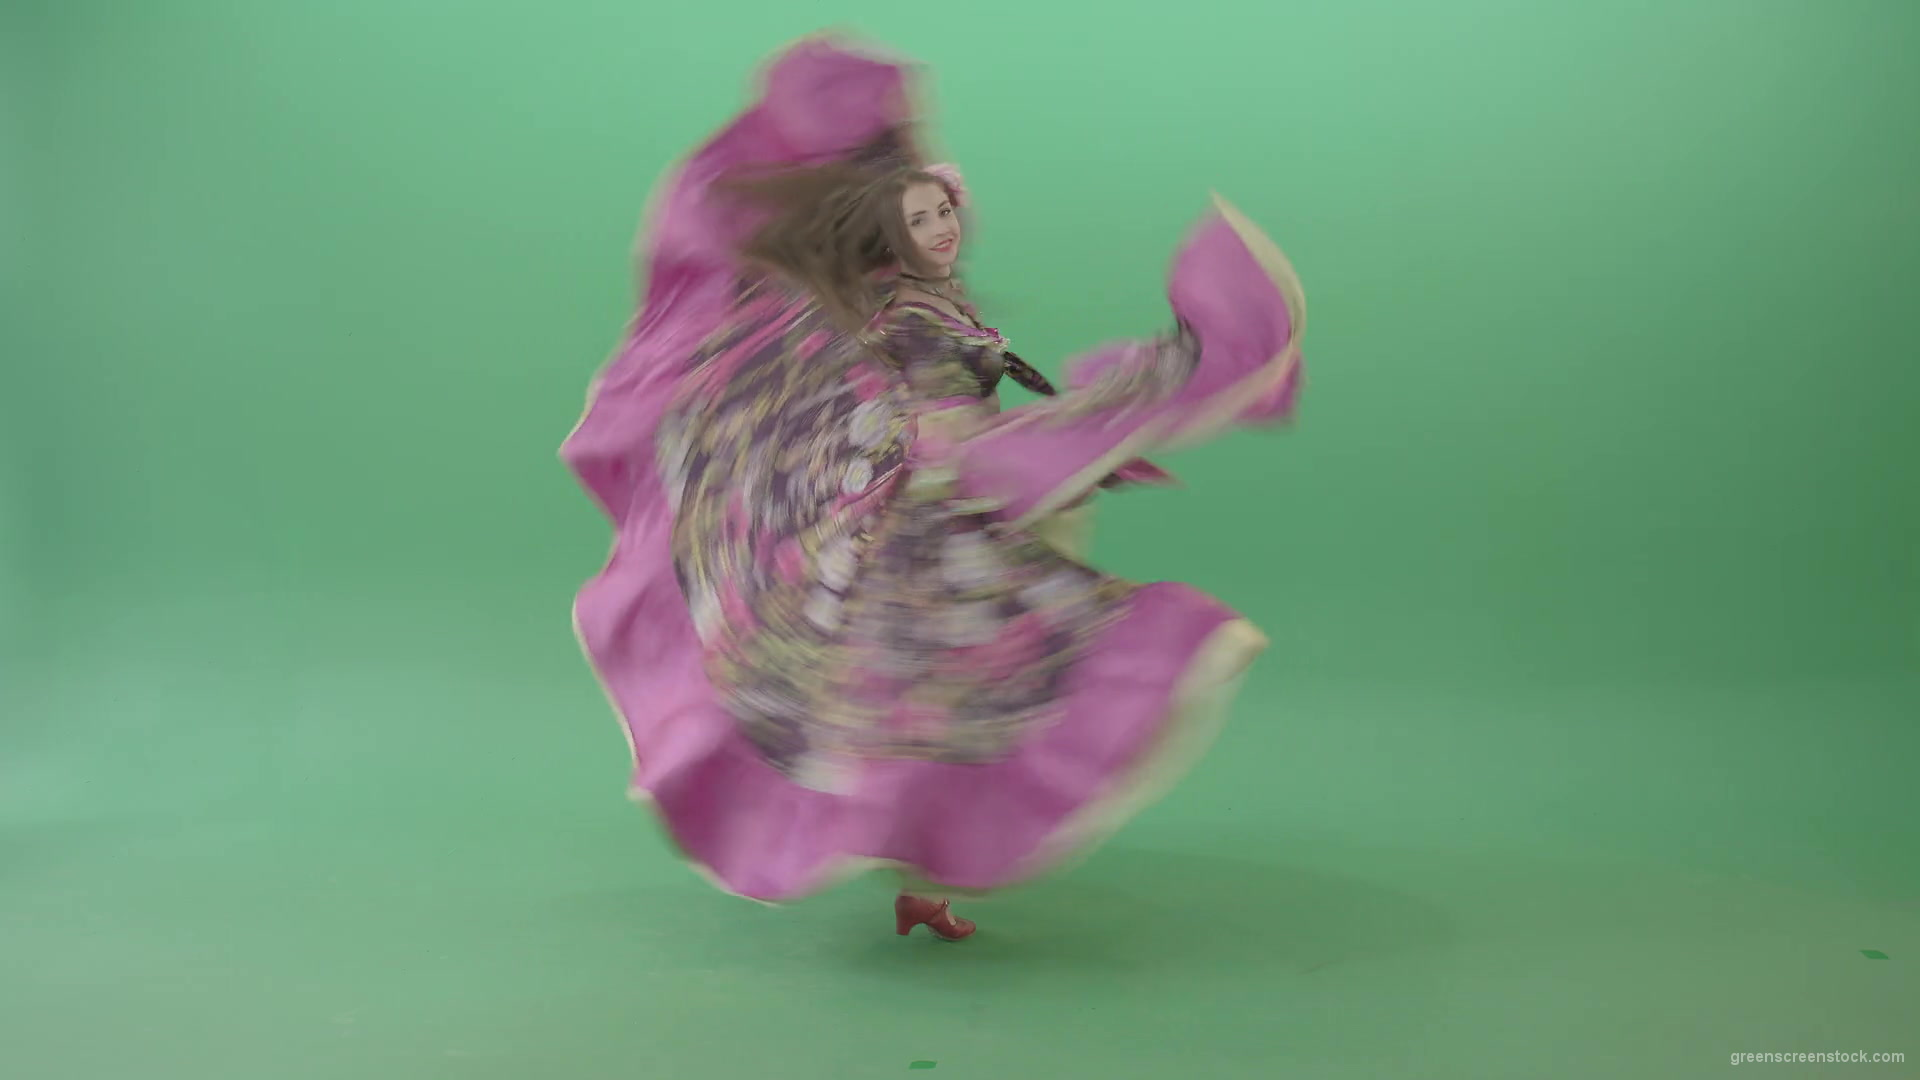 Beautiful-girl-in-balkan-pink-dress-dancing-gypsy-folk-dance-isolated-on-green-screen-4K-Video-Clip-1920_008 Green Screen Stock